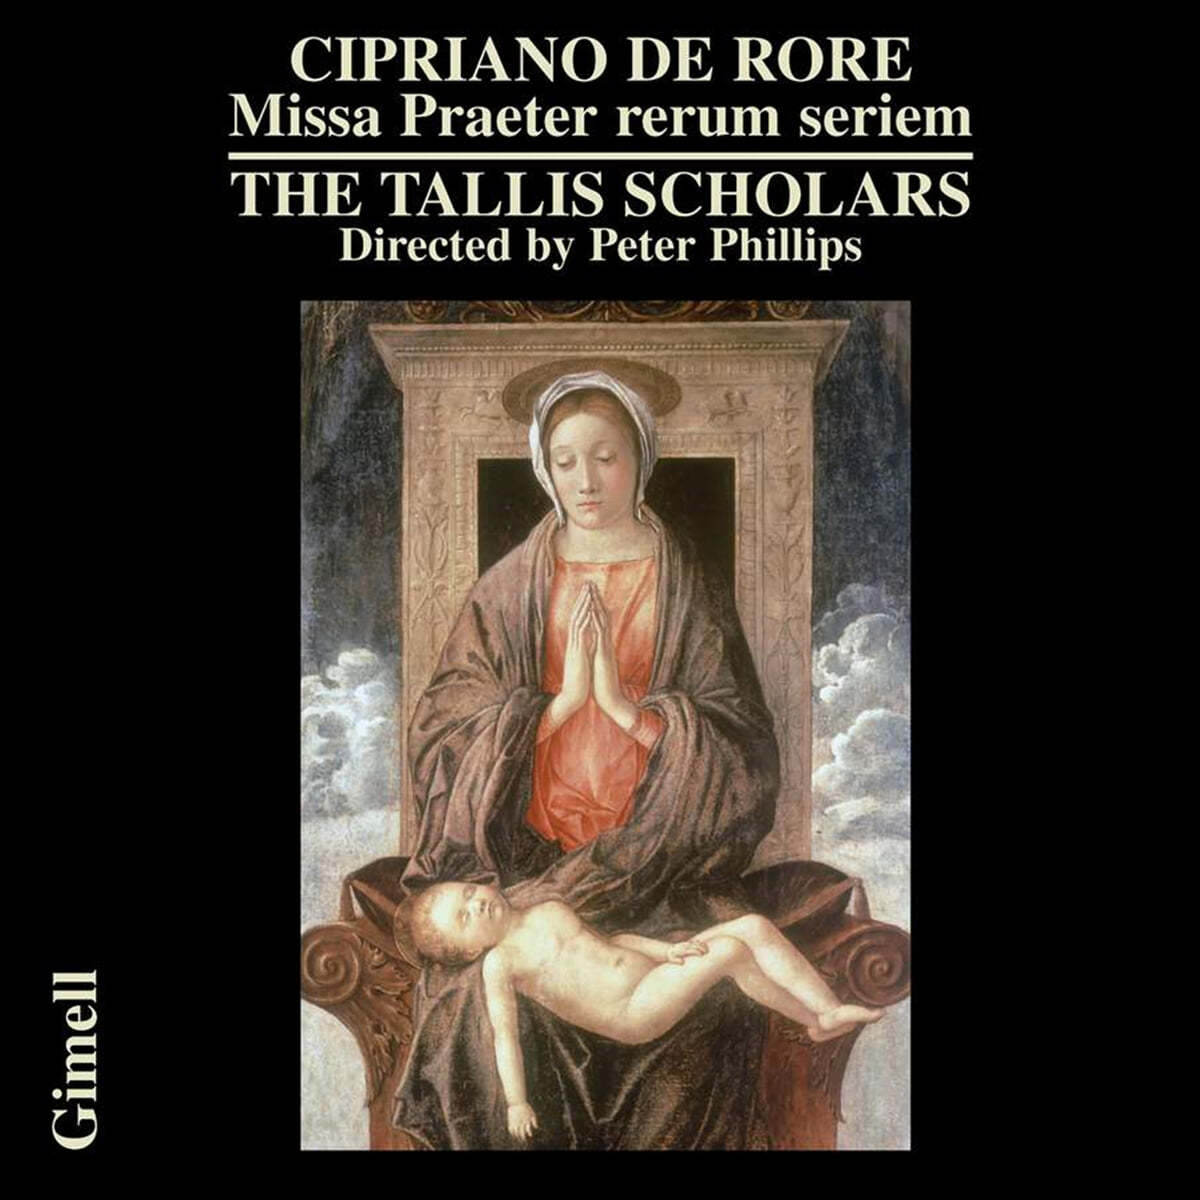 The Tallis Scholars 치프리아노 데 로레: 미사곡 (Cipriano de Rore: Missa Praeter rerum seriem) 